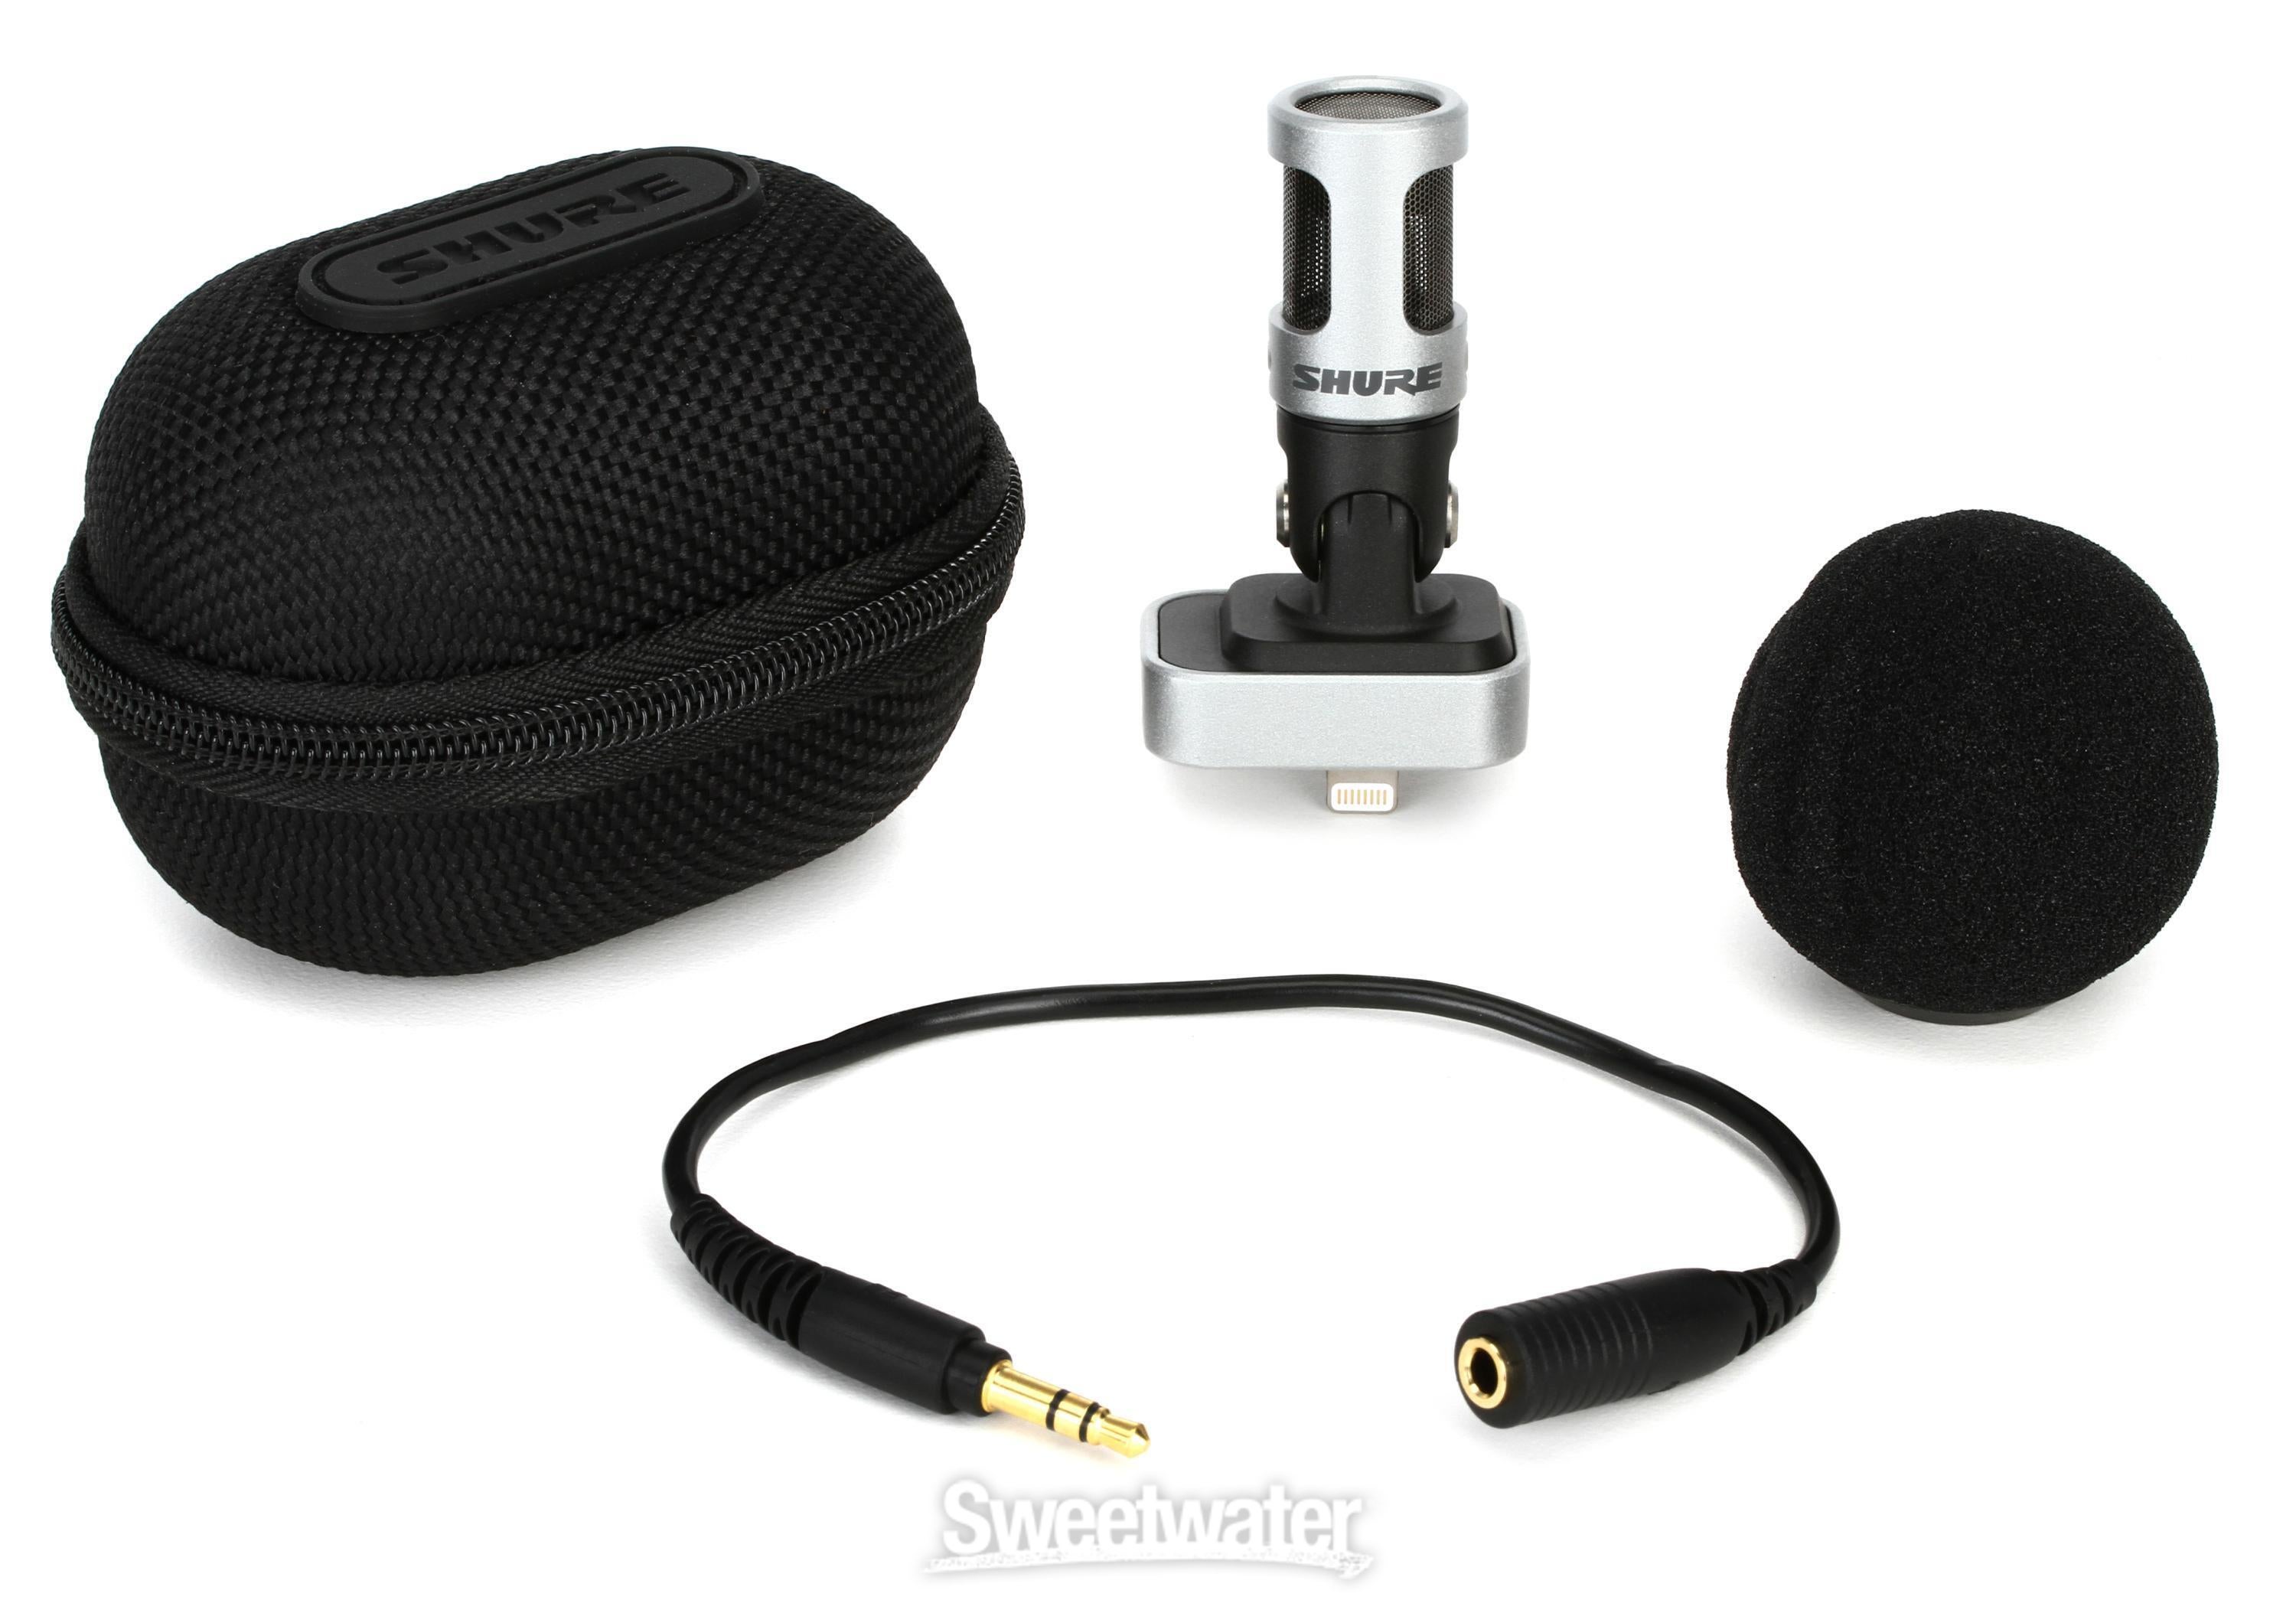 Shure MV88 Digital Stereo Condenser Microphone for iOS Reviews